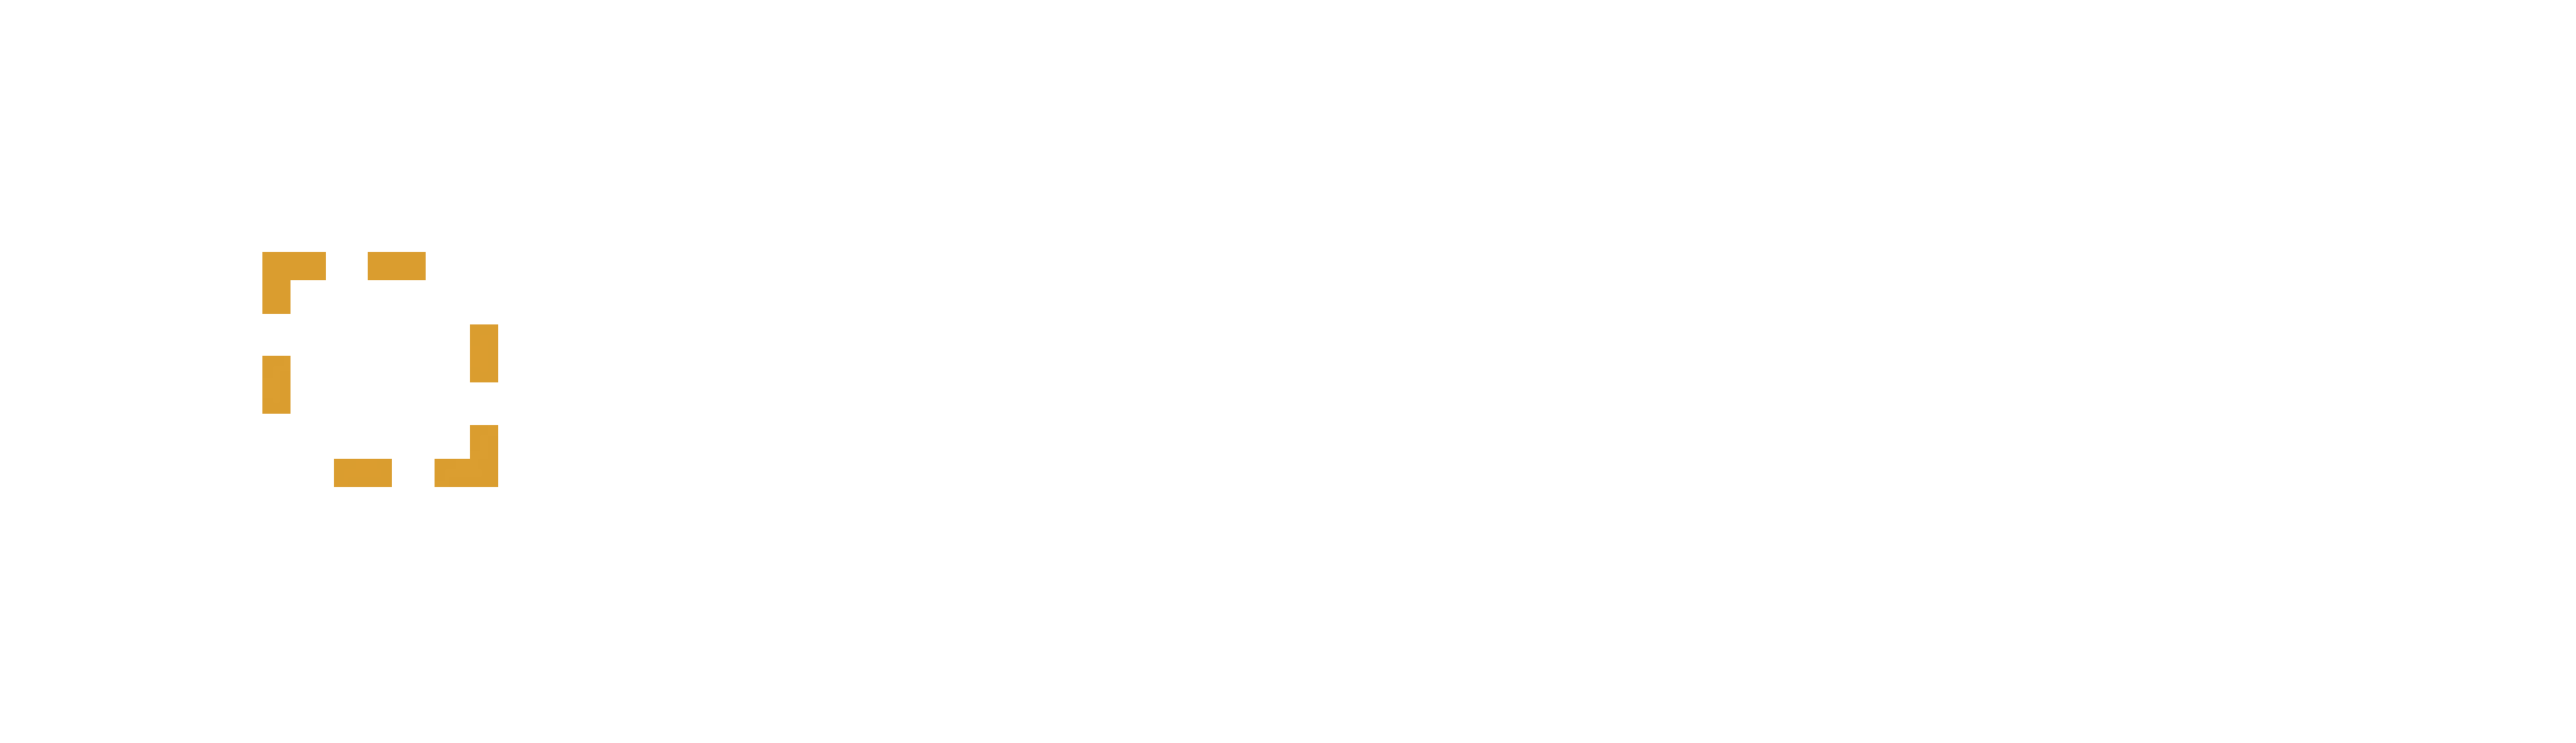 igno-logo.png